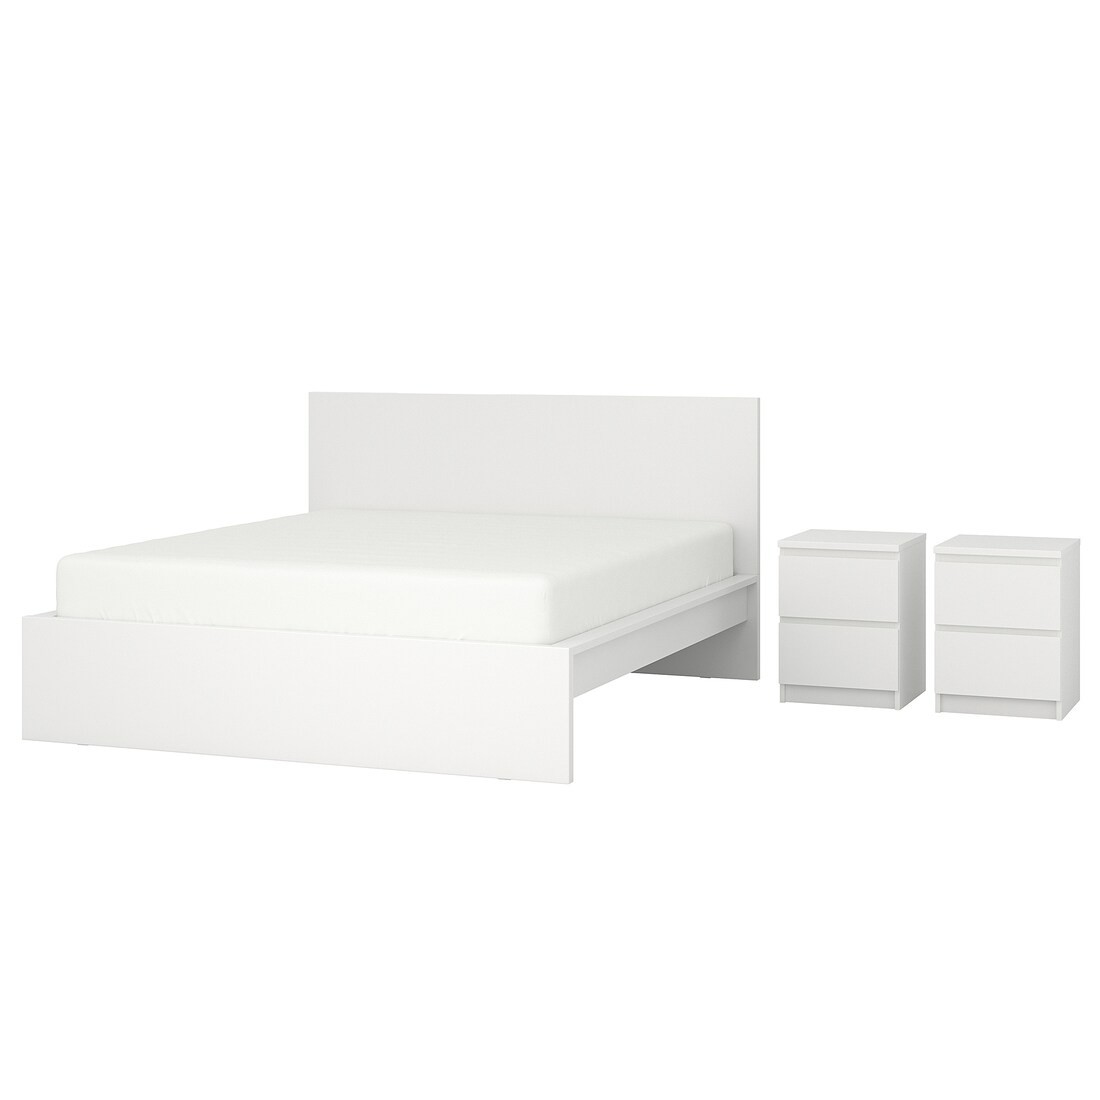 IKEA MALM МАЛЬМ Набор мебели для спальни 3 шт, белый, 180x200 см 69488263 694.882.63